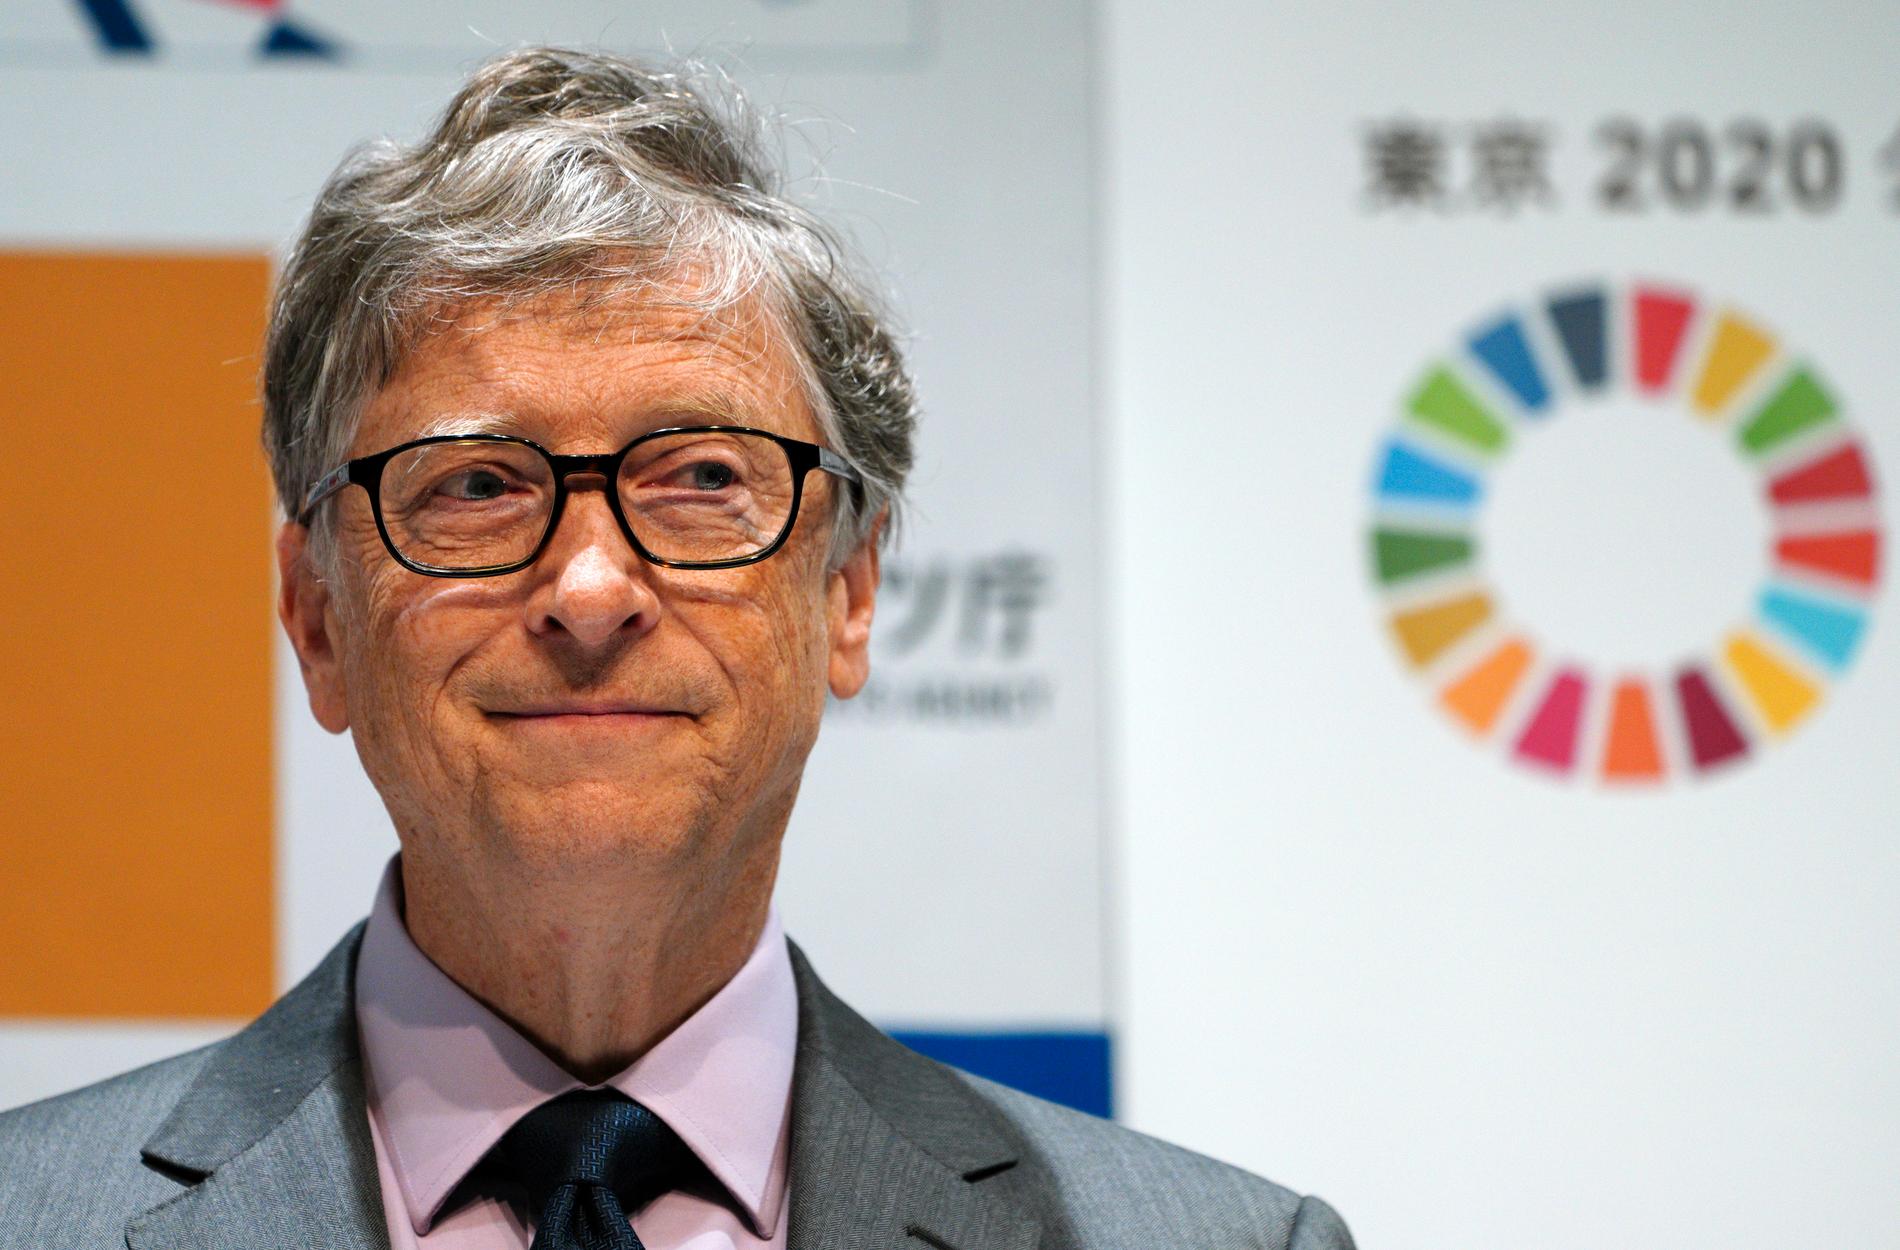 Tidigare Microsoft-vd:n Bill Gates på möte i Tokyo, Japan 2018.